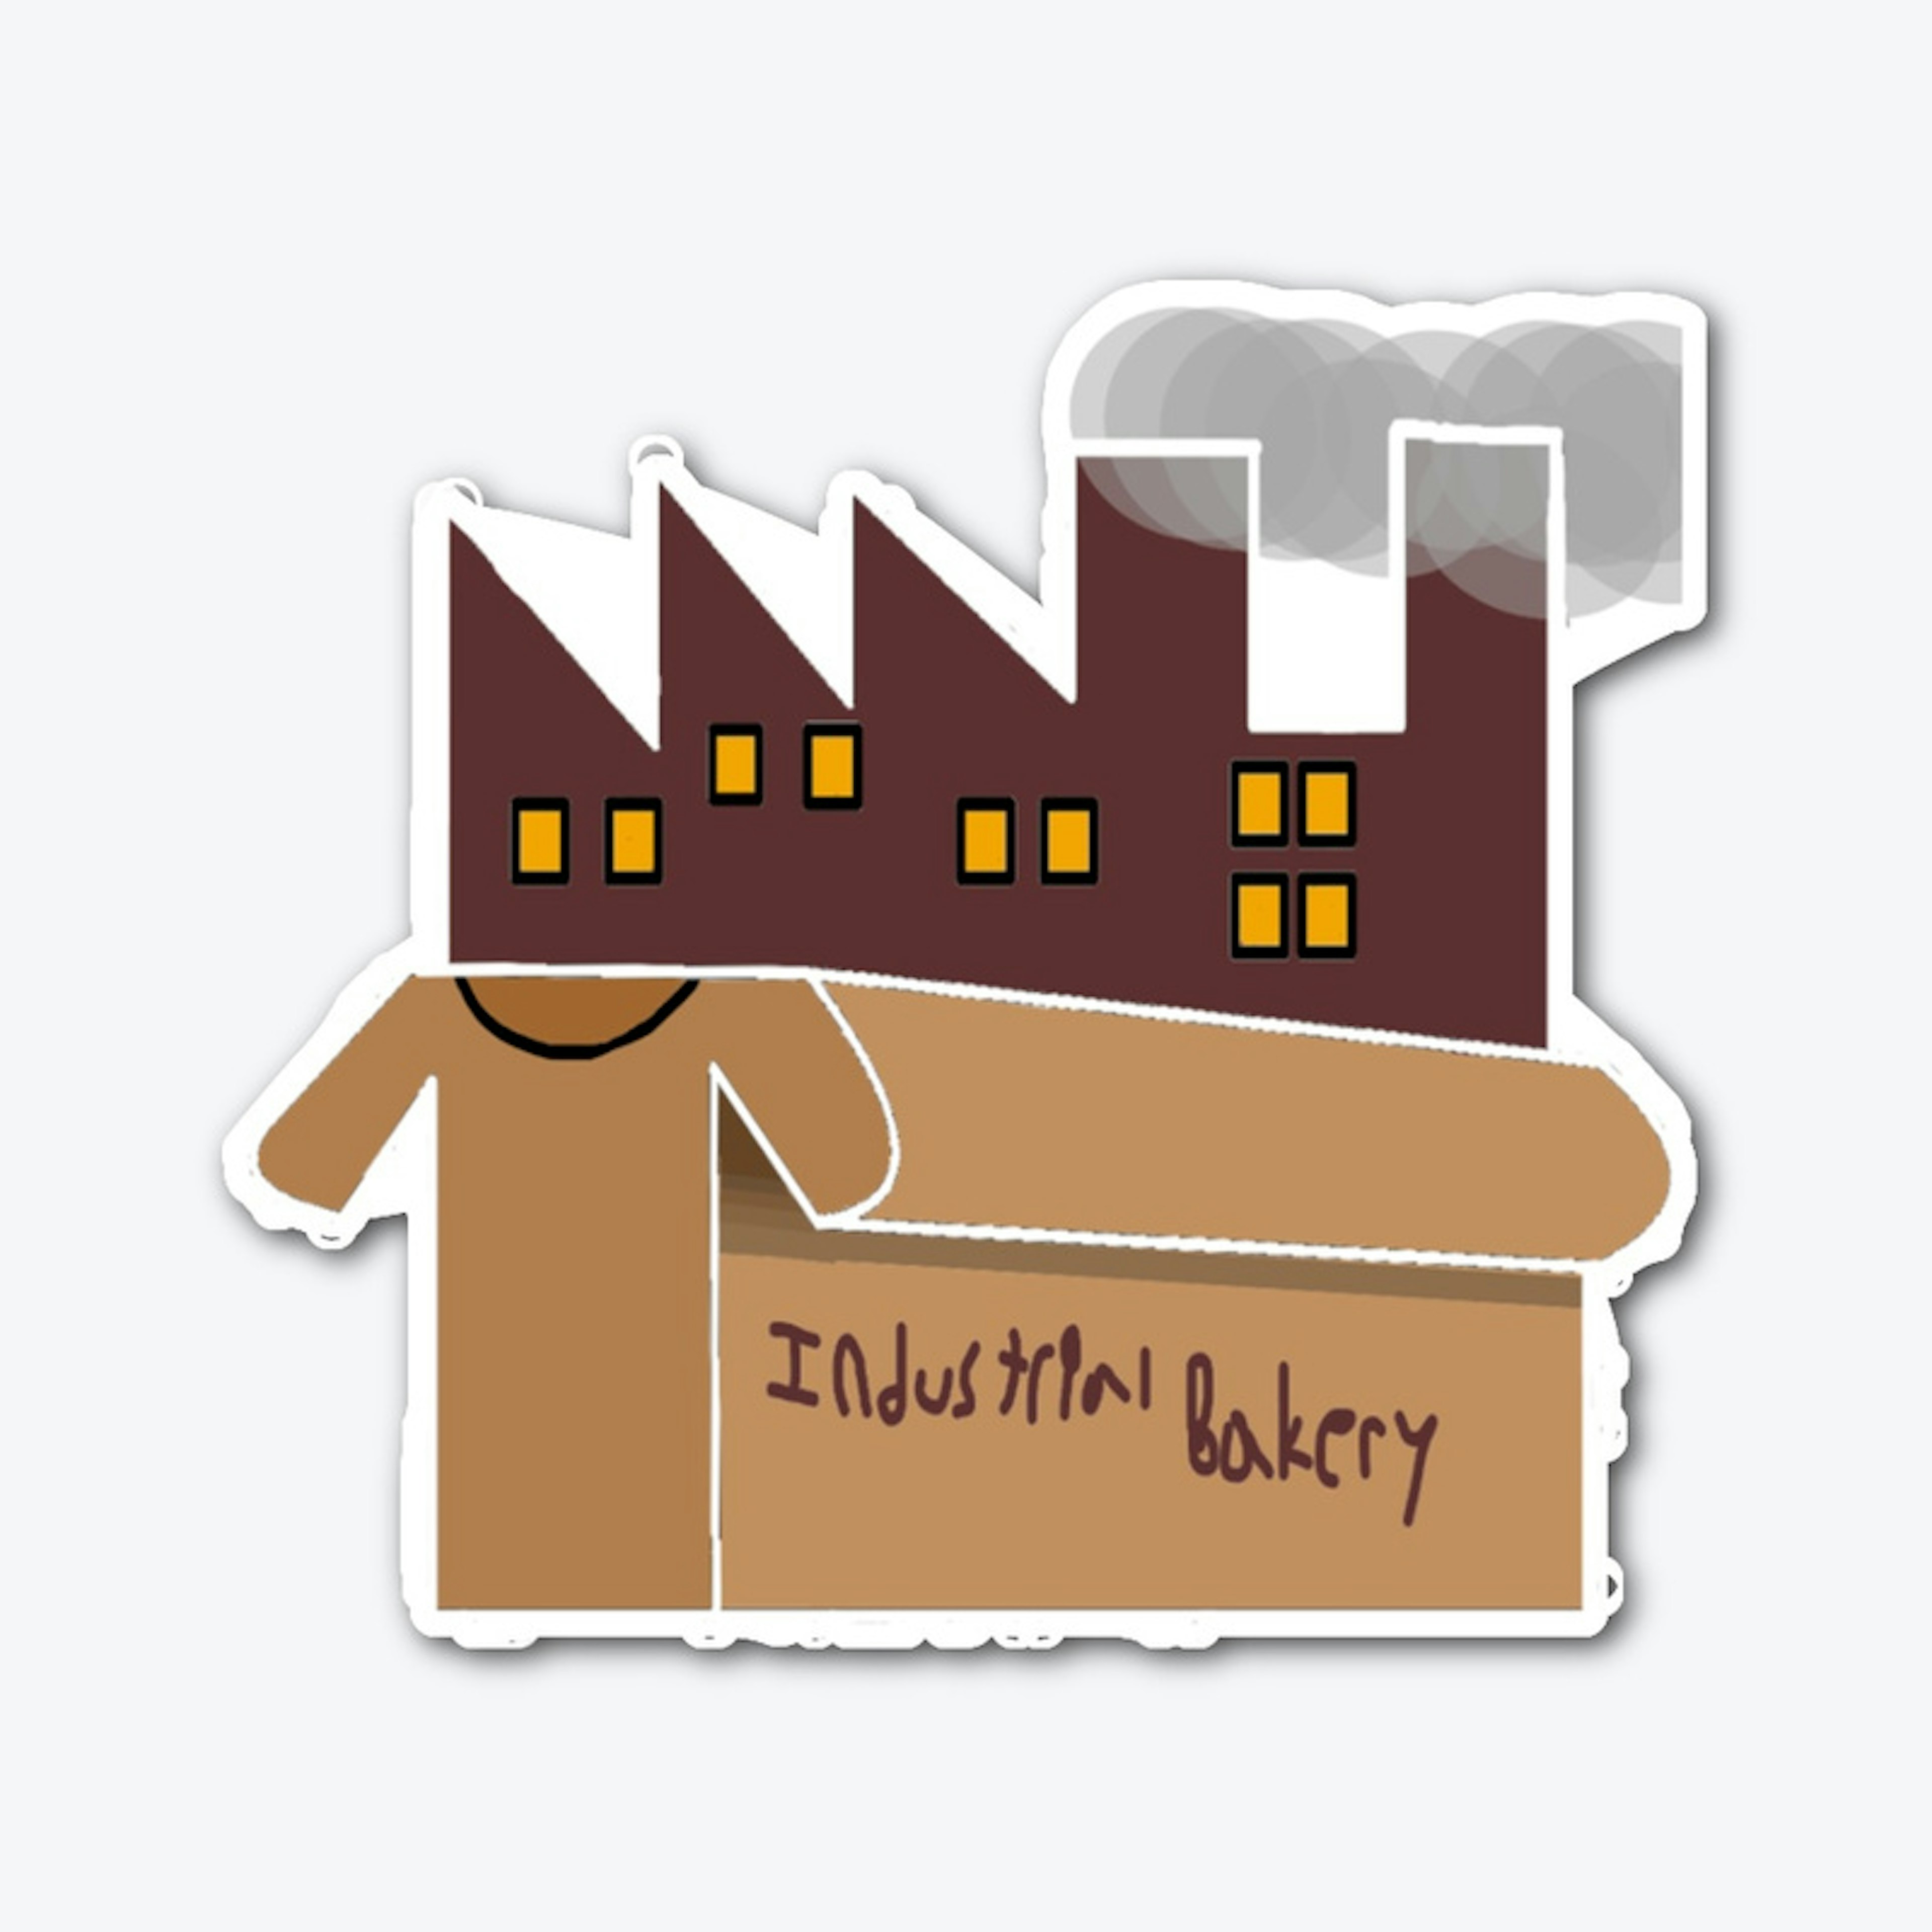 Industrial Bakery Logo